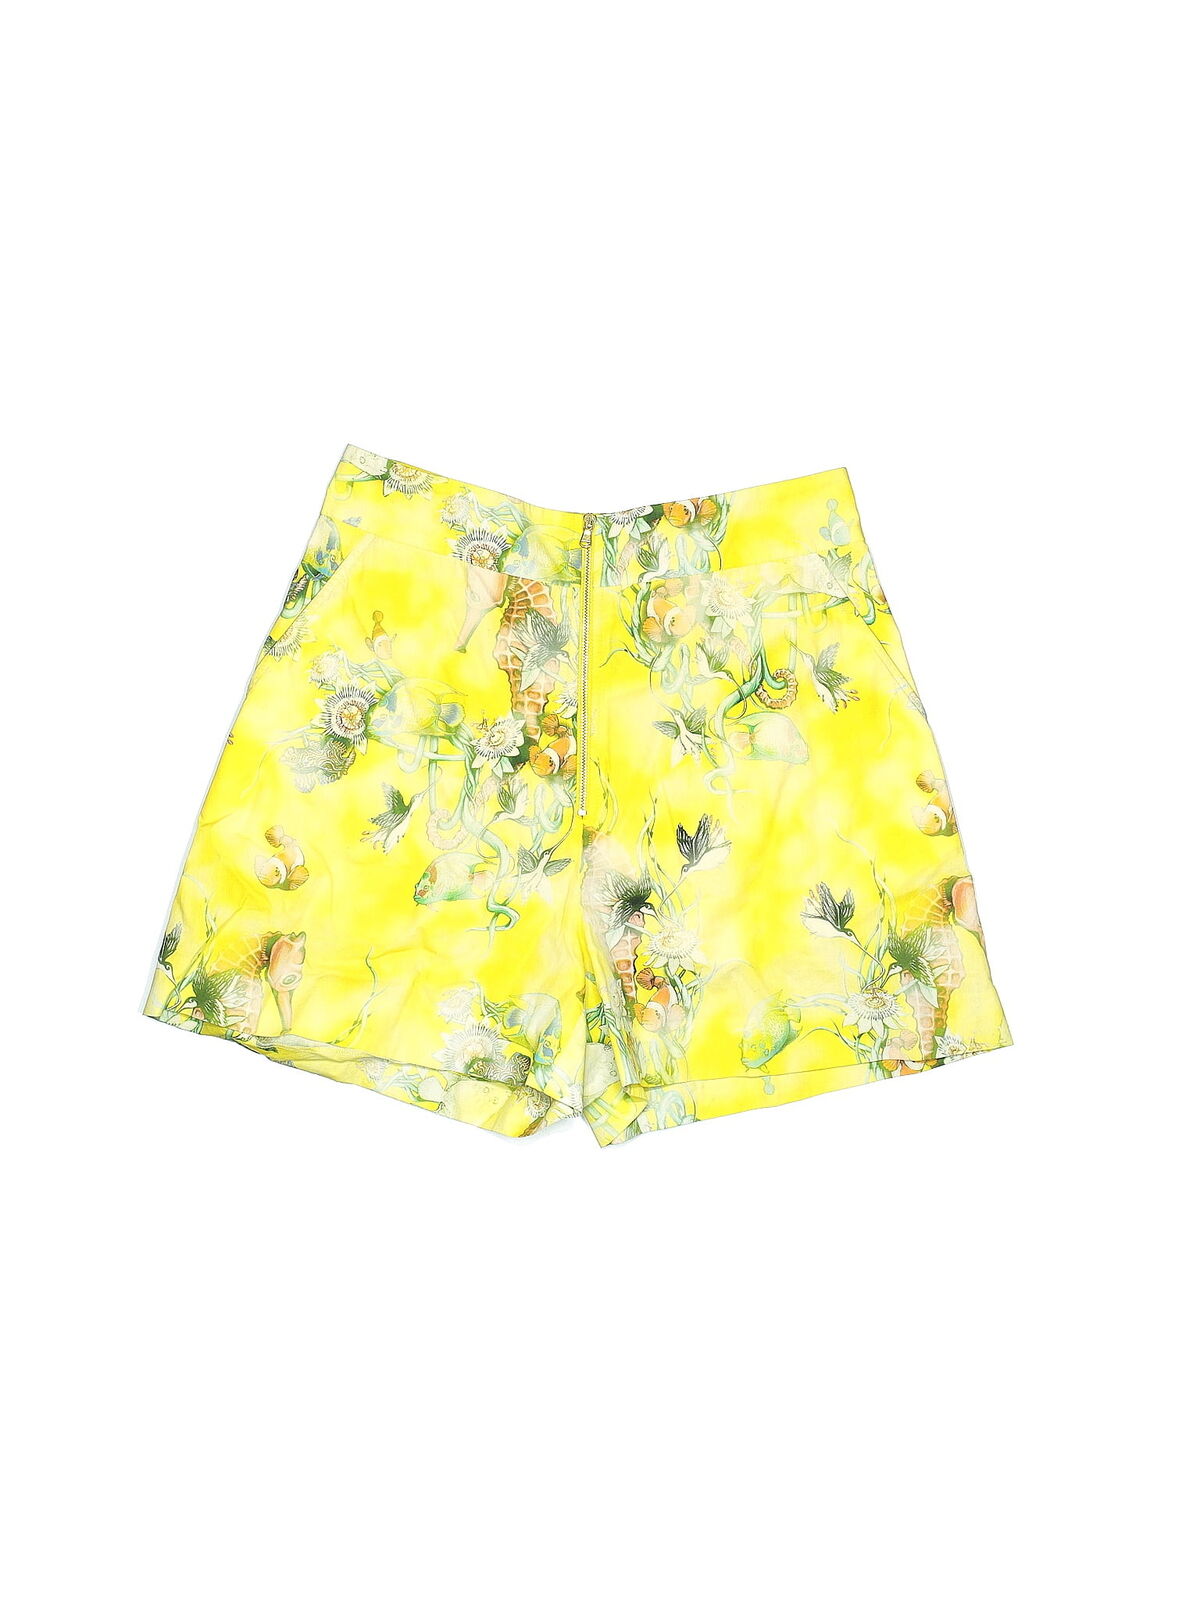 Philosophy Women Yellow Dressy Shorts 2 - image 2